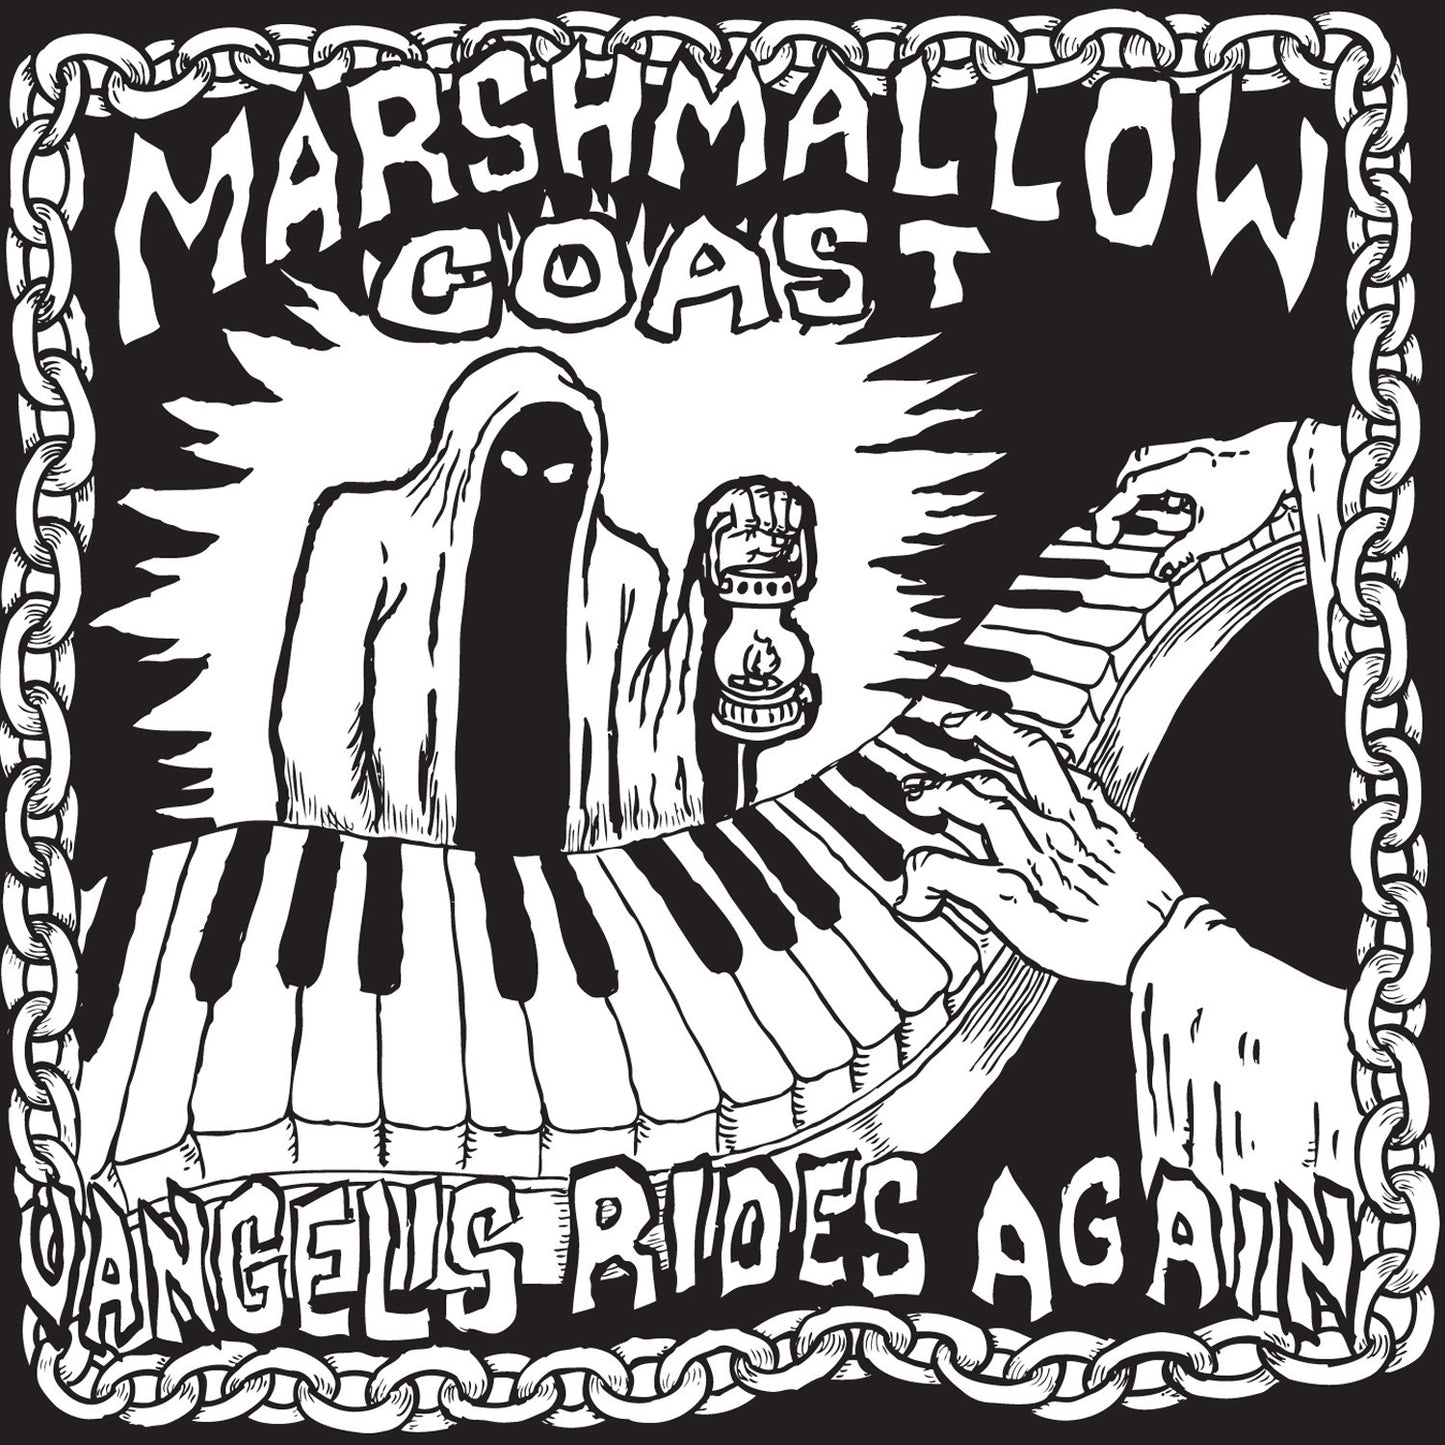 MARSHMALLOW COAST "Vangelis Rides Again" vinyl LP / CD